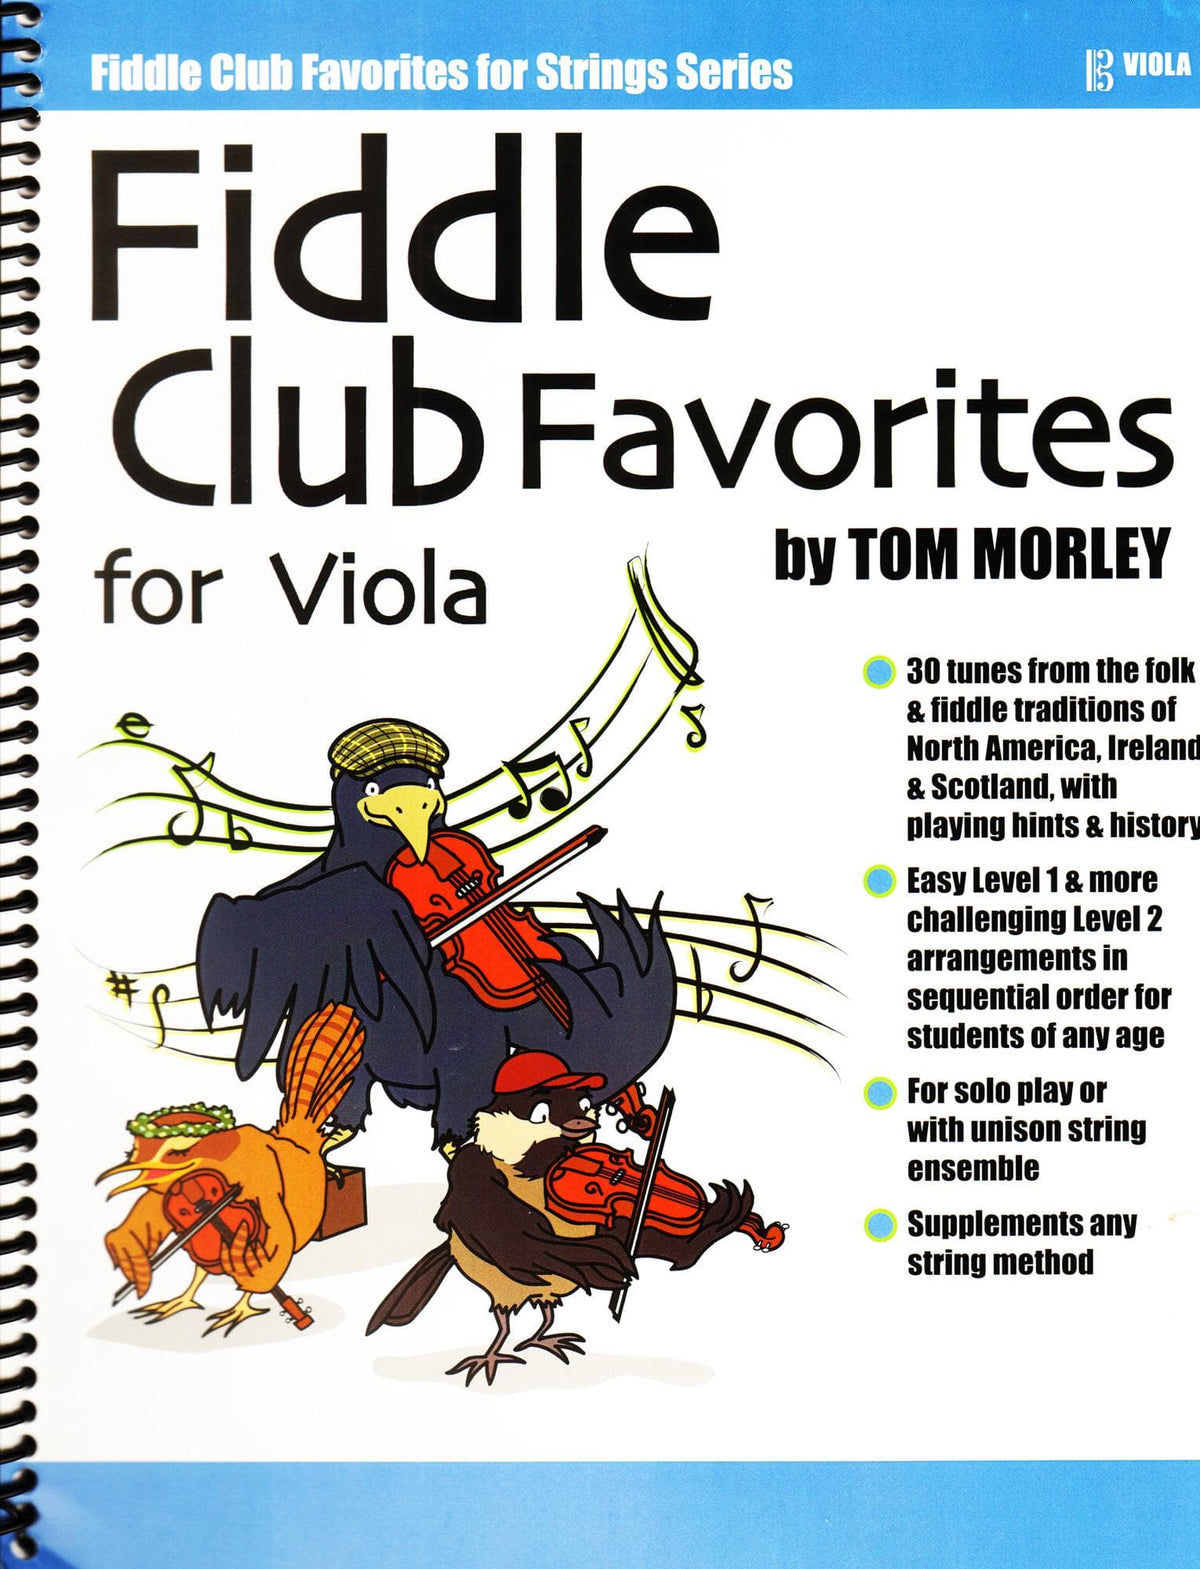 Tom Morley - Fiddle Club Favorites - for Viola - by Flying Frog Music